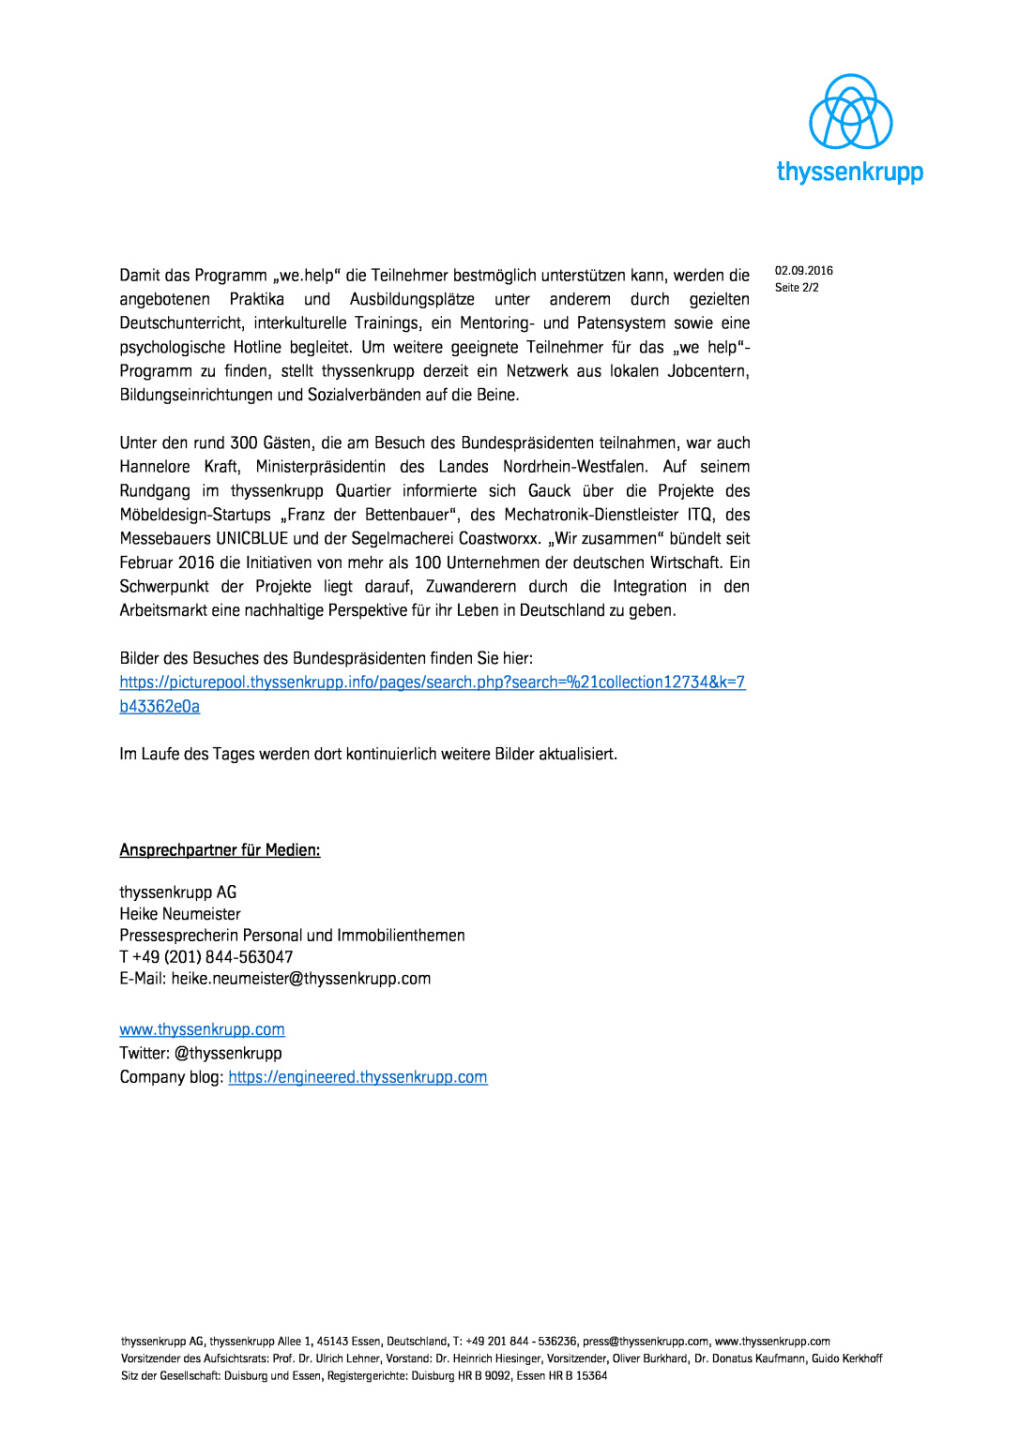 thyssenkrupp: Bundespräsident Joachim Gauck würdigt Engagement für Flüchtlinge im thyssenkrupp Quartier, Seite 2/2, komplettes Dokument unter http://boerse-social.com/static/uploads/file_1716_thyssenkrupp_bundesprasident_joachim_gauck_wurdigt_engagement_fur_fluchtlinge_im_thyssenkrupp_quartier.pdf